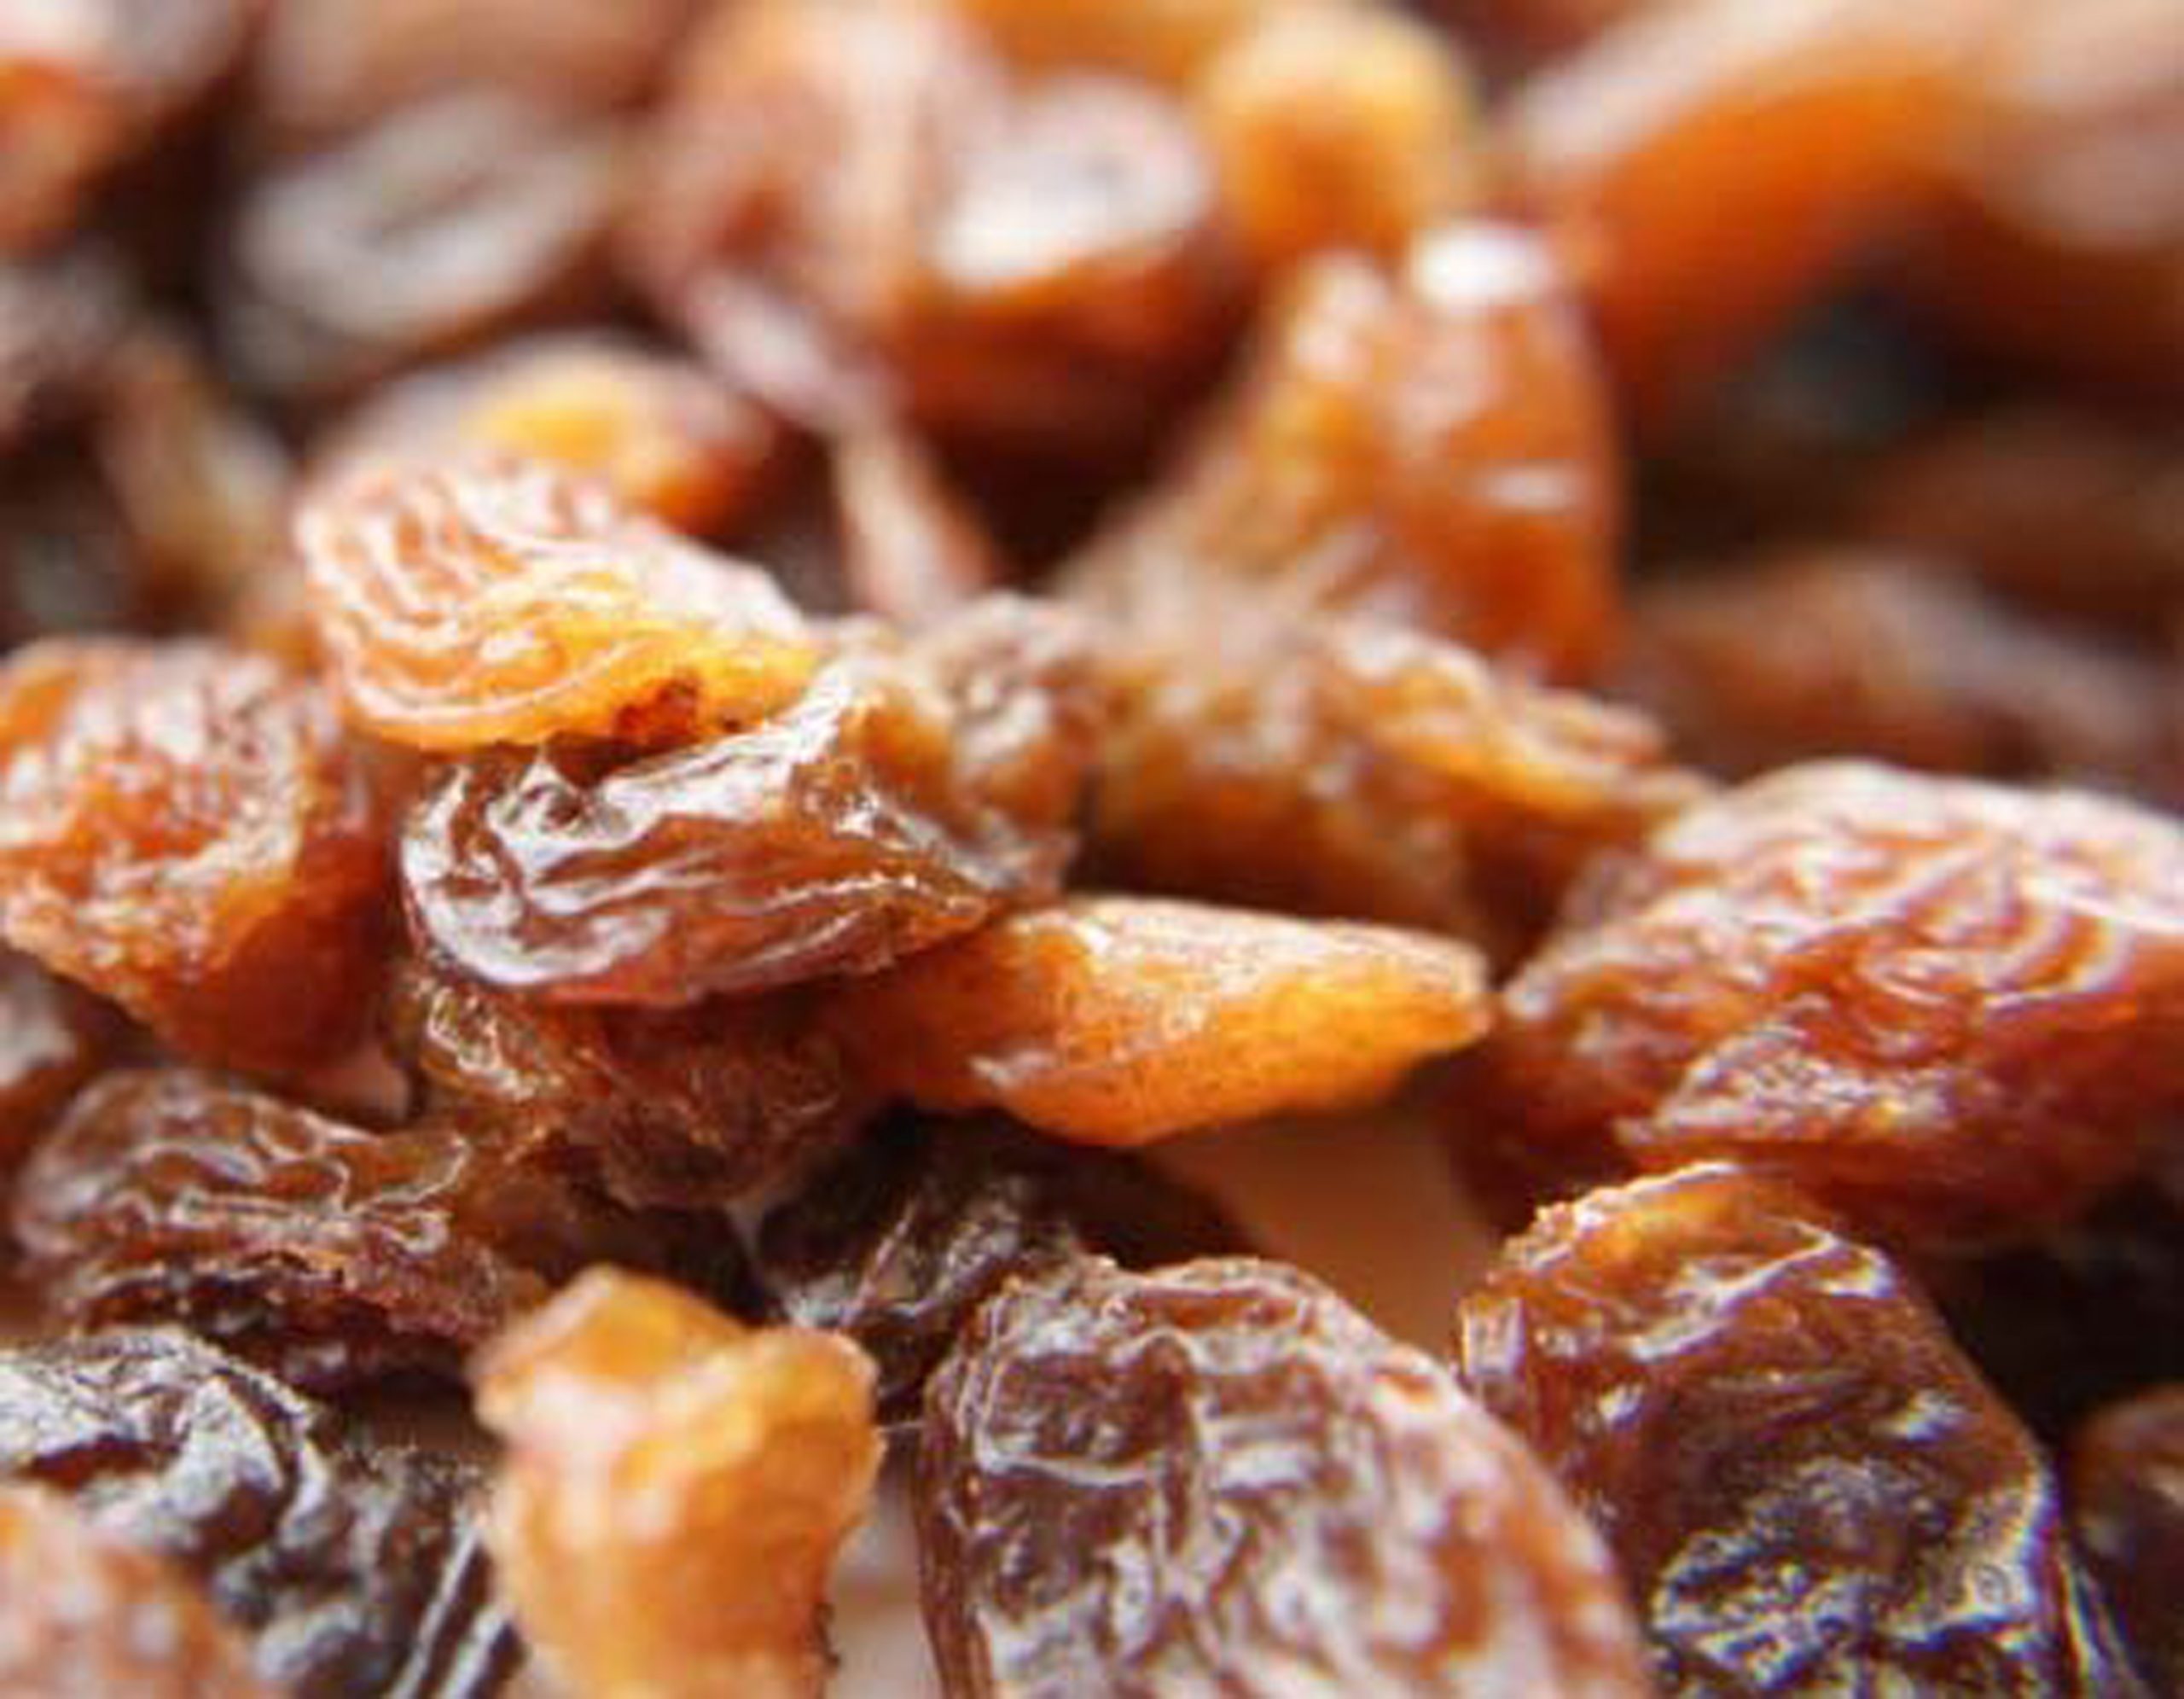 Bulk sale of Iranian raisins